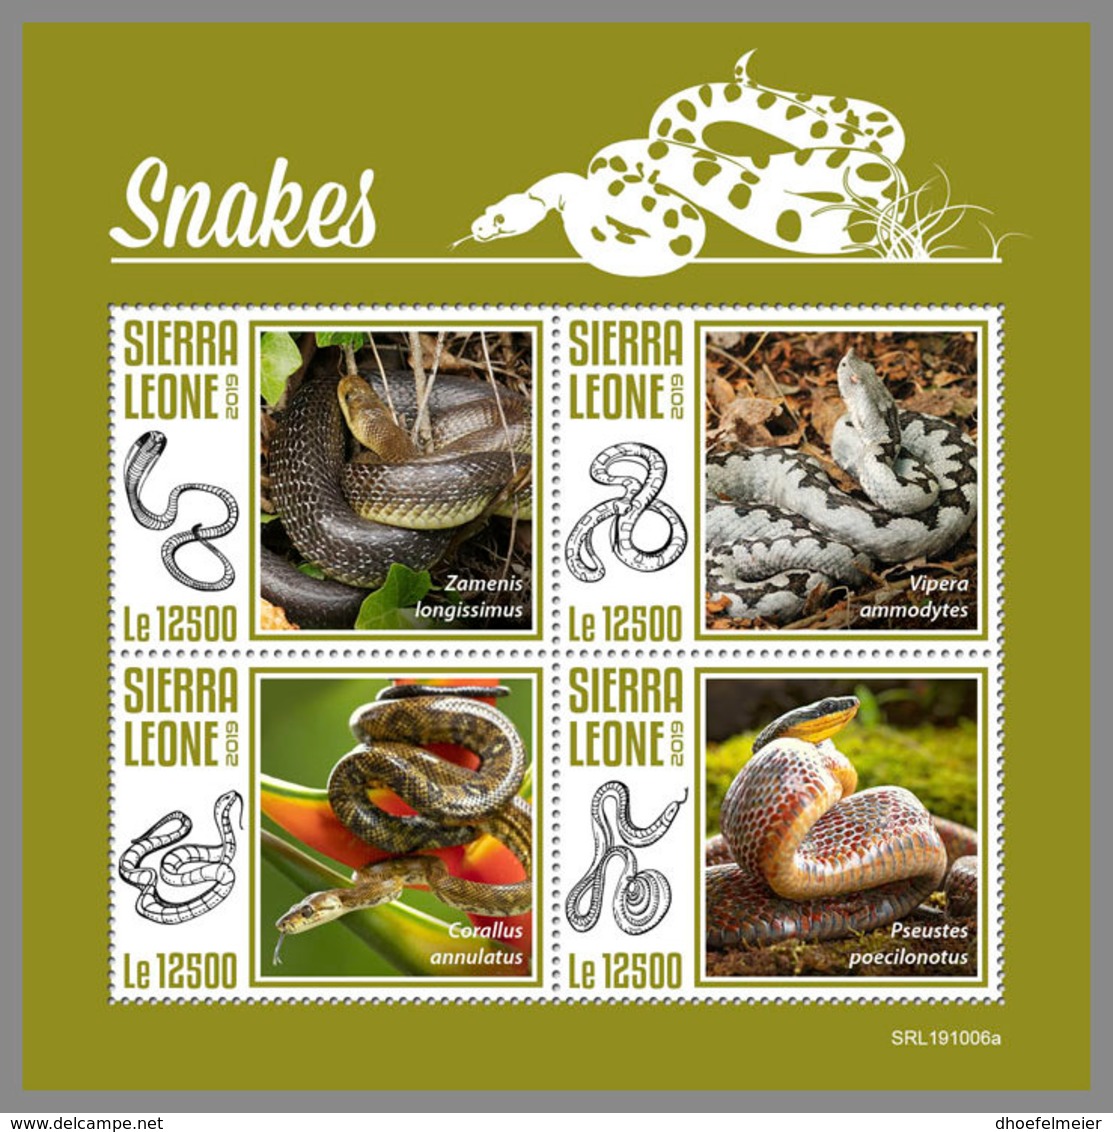 SIERRA LEONE 2019 MNH Snakes Schlangen Serpents M/S - OFFICIAL ISSUE - DH1948 - Serpents